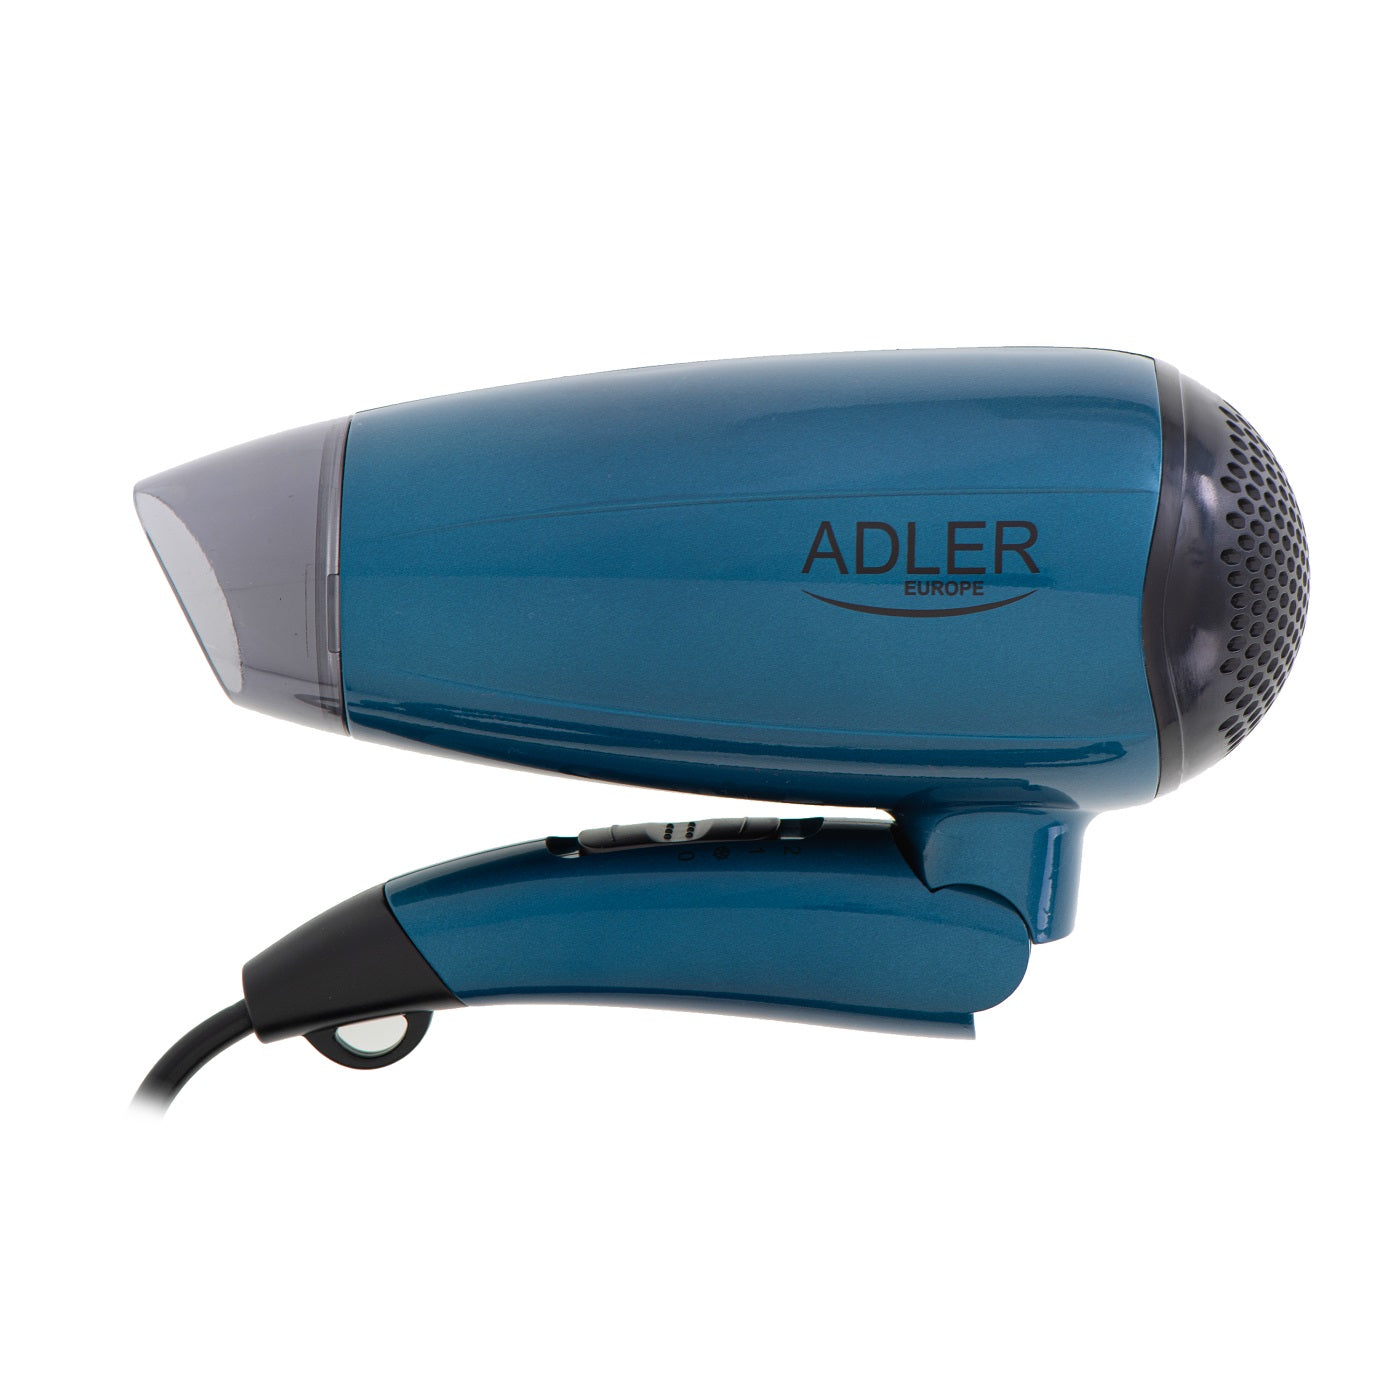 Adler AD2263 Hair dryer 1800W